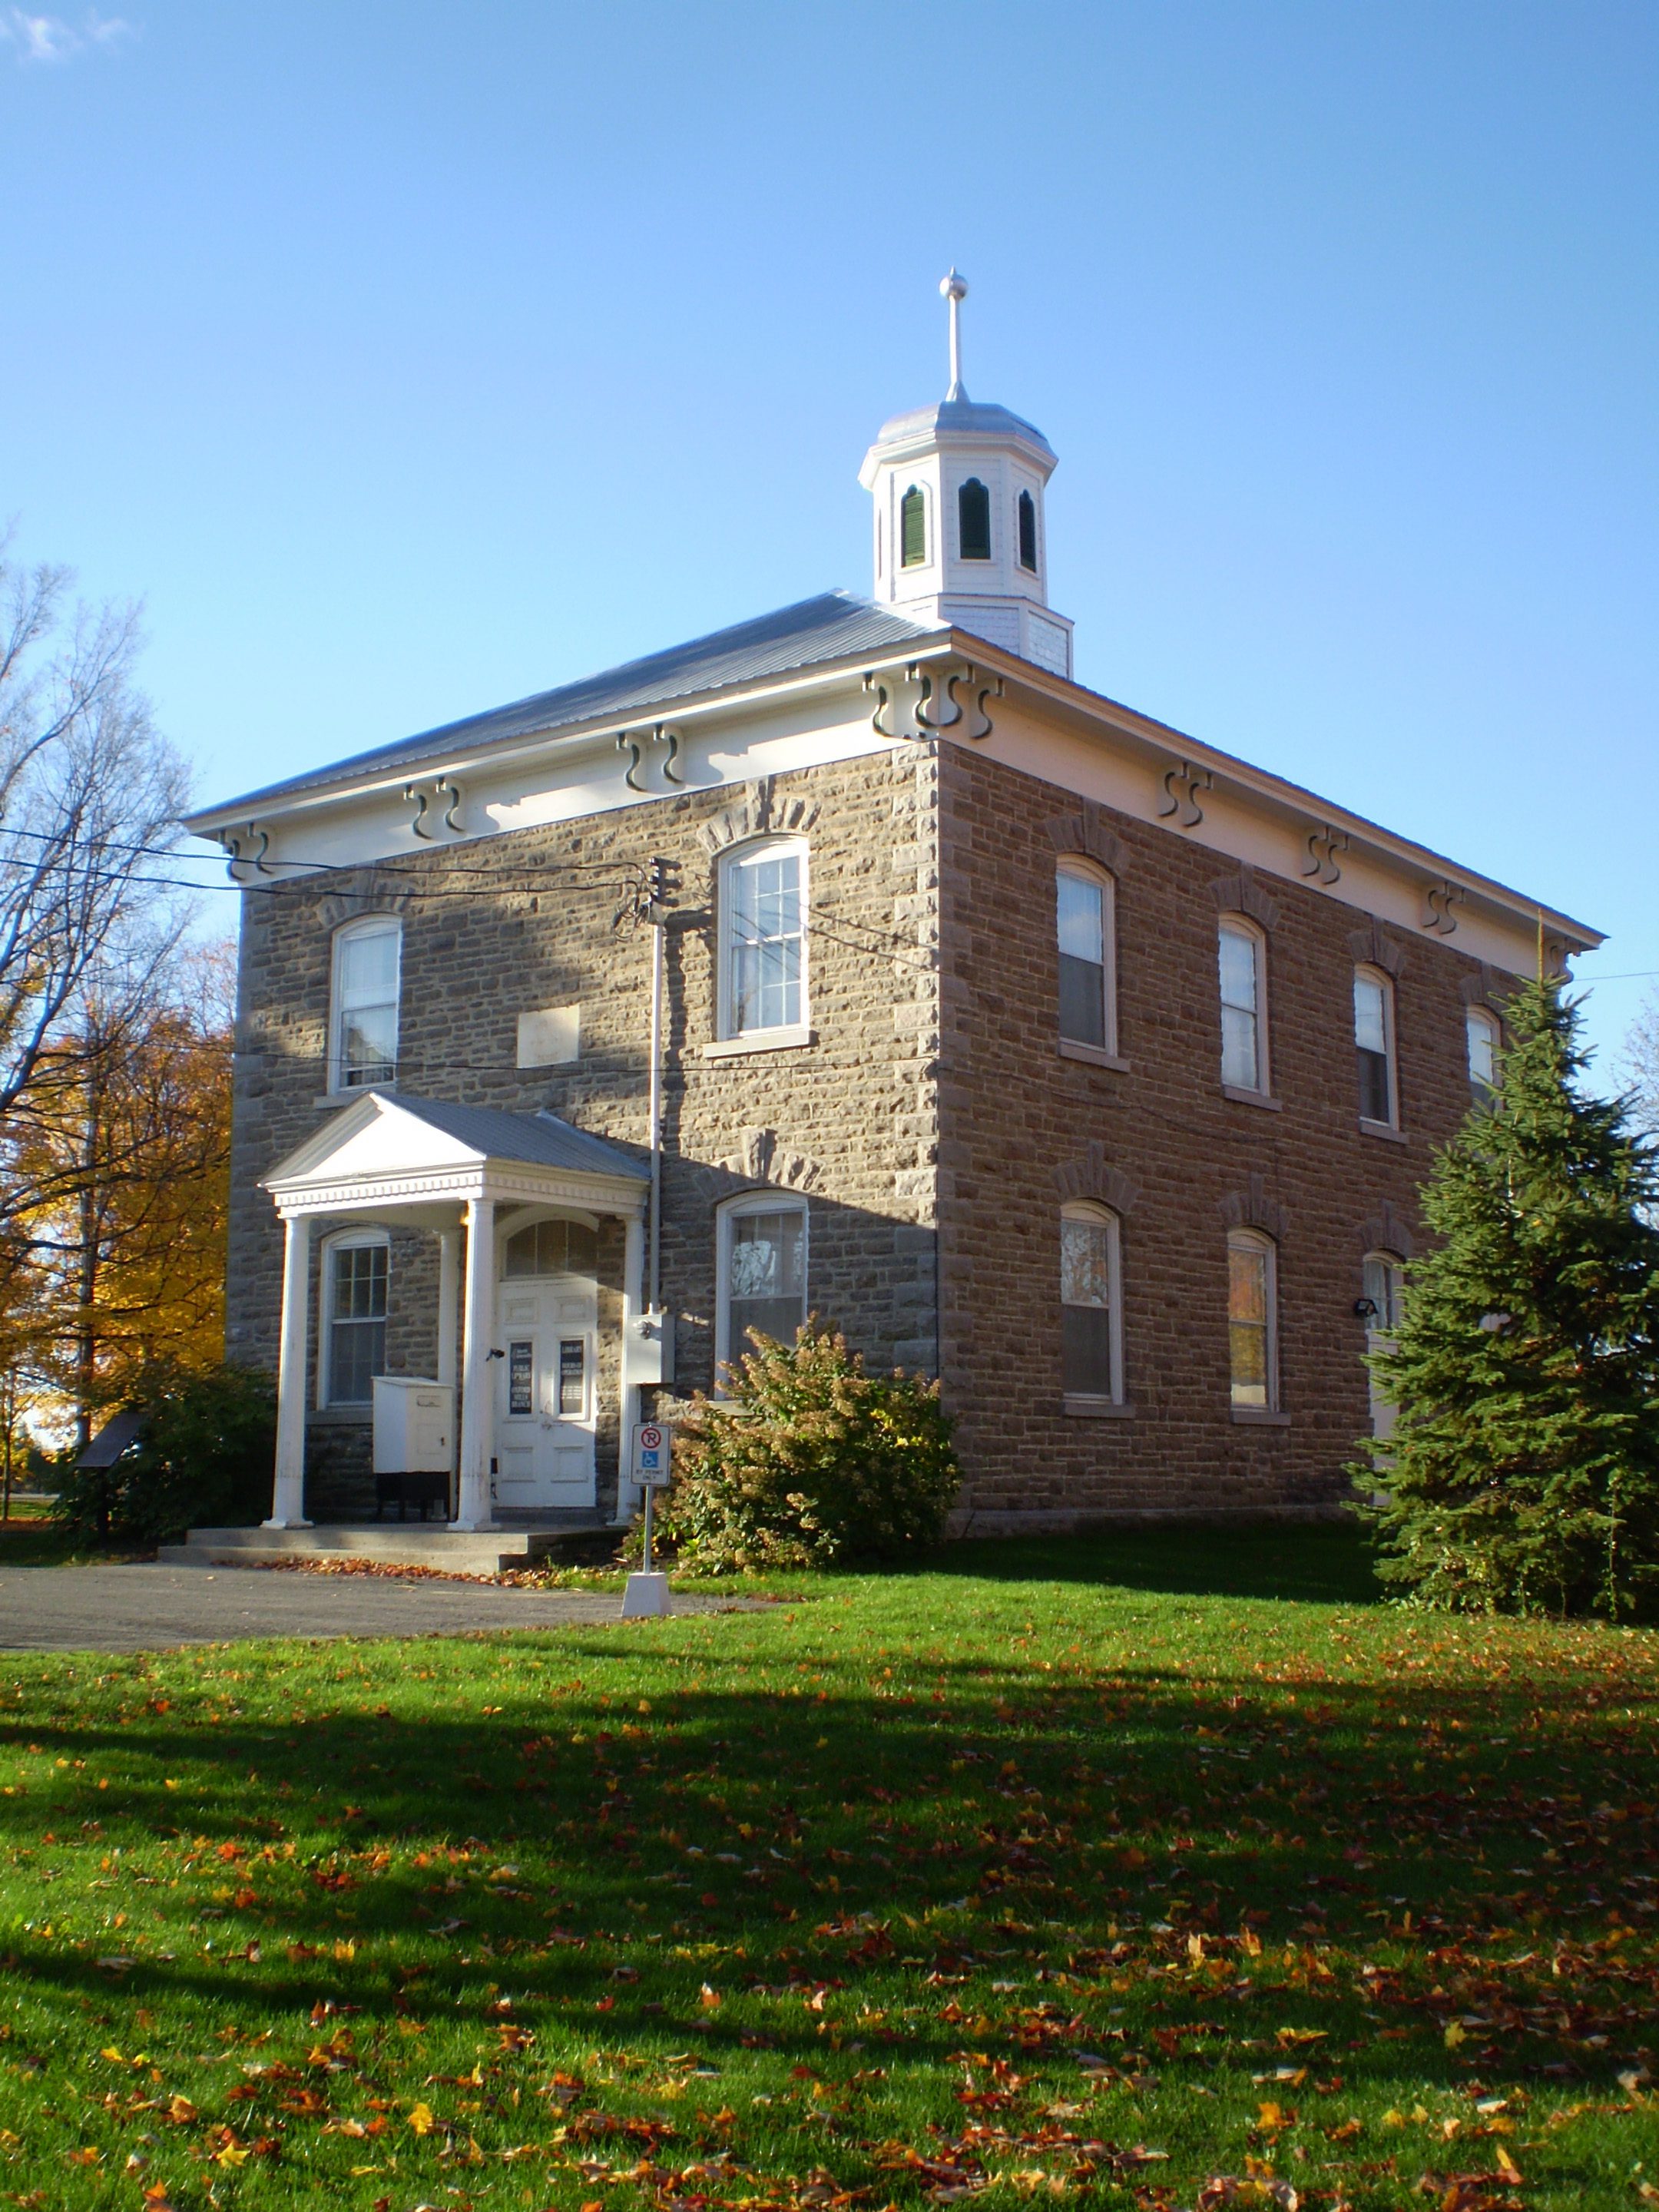 Oxford-on-Rideau Township Hall